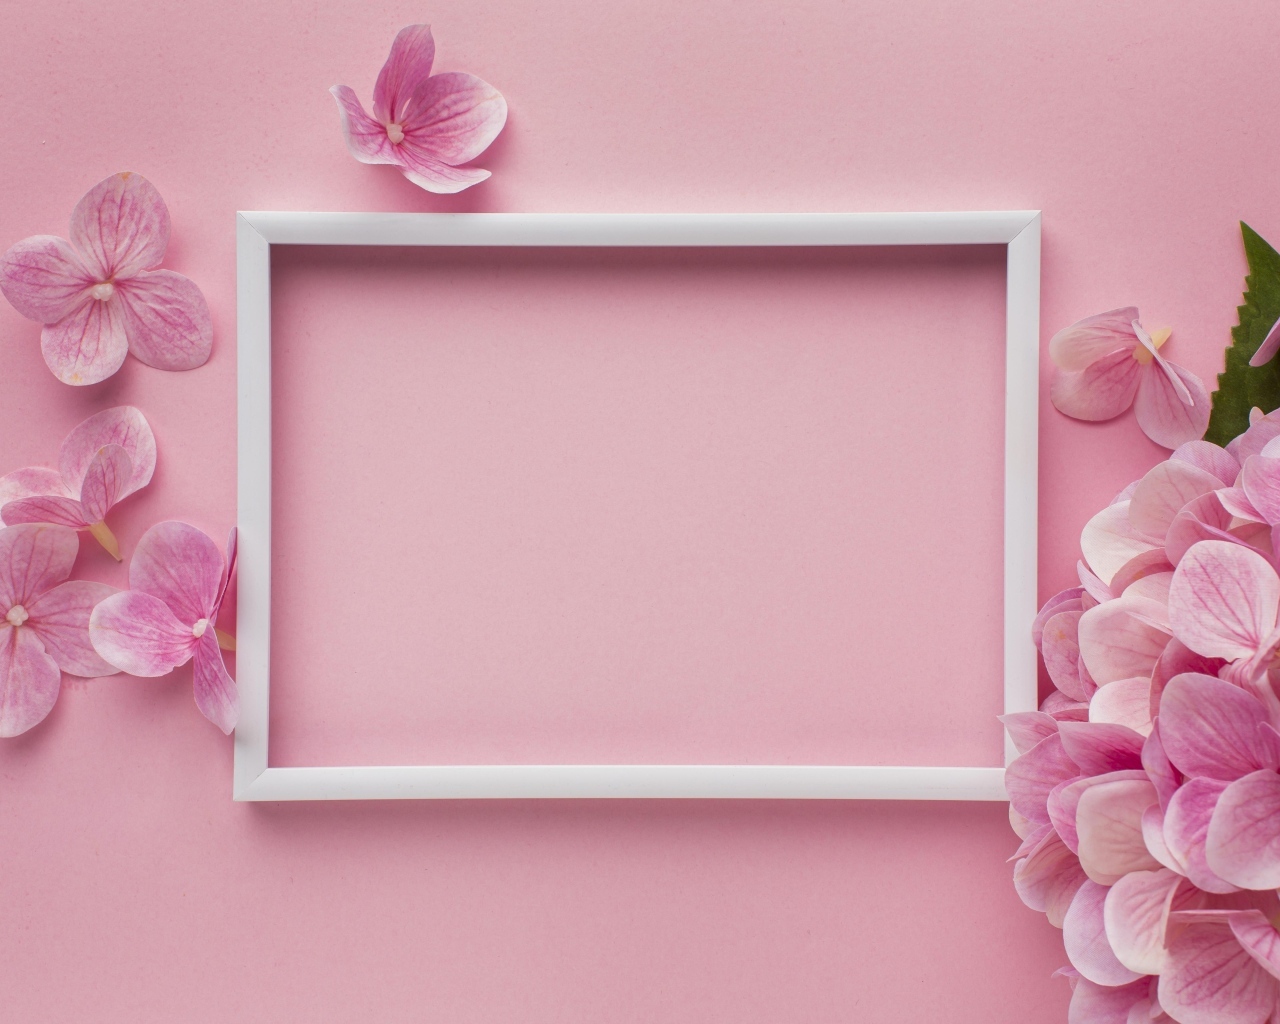 Белая рамка с цветами гортензии на розовом фоне, шаблон для открытки